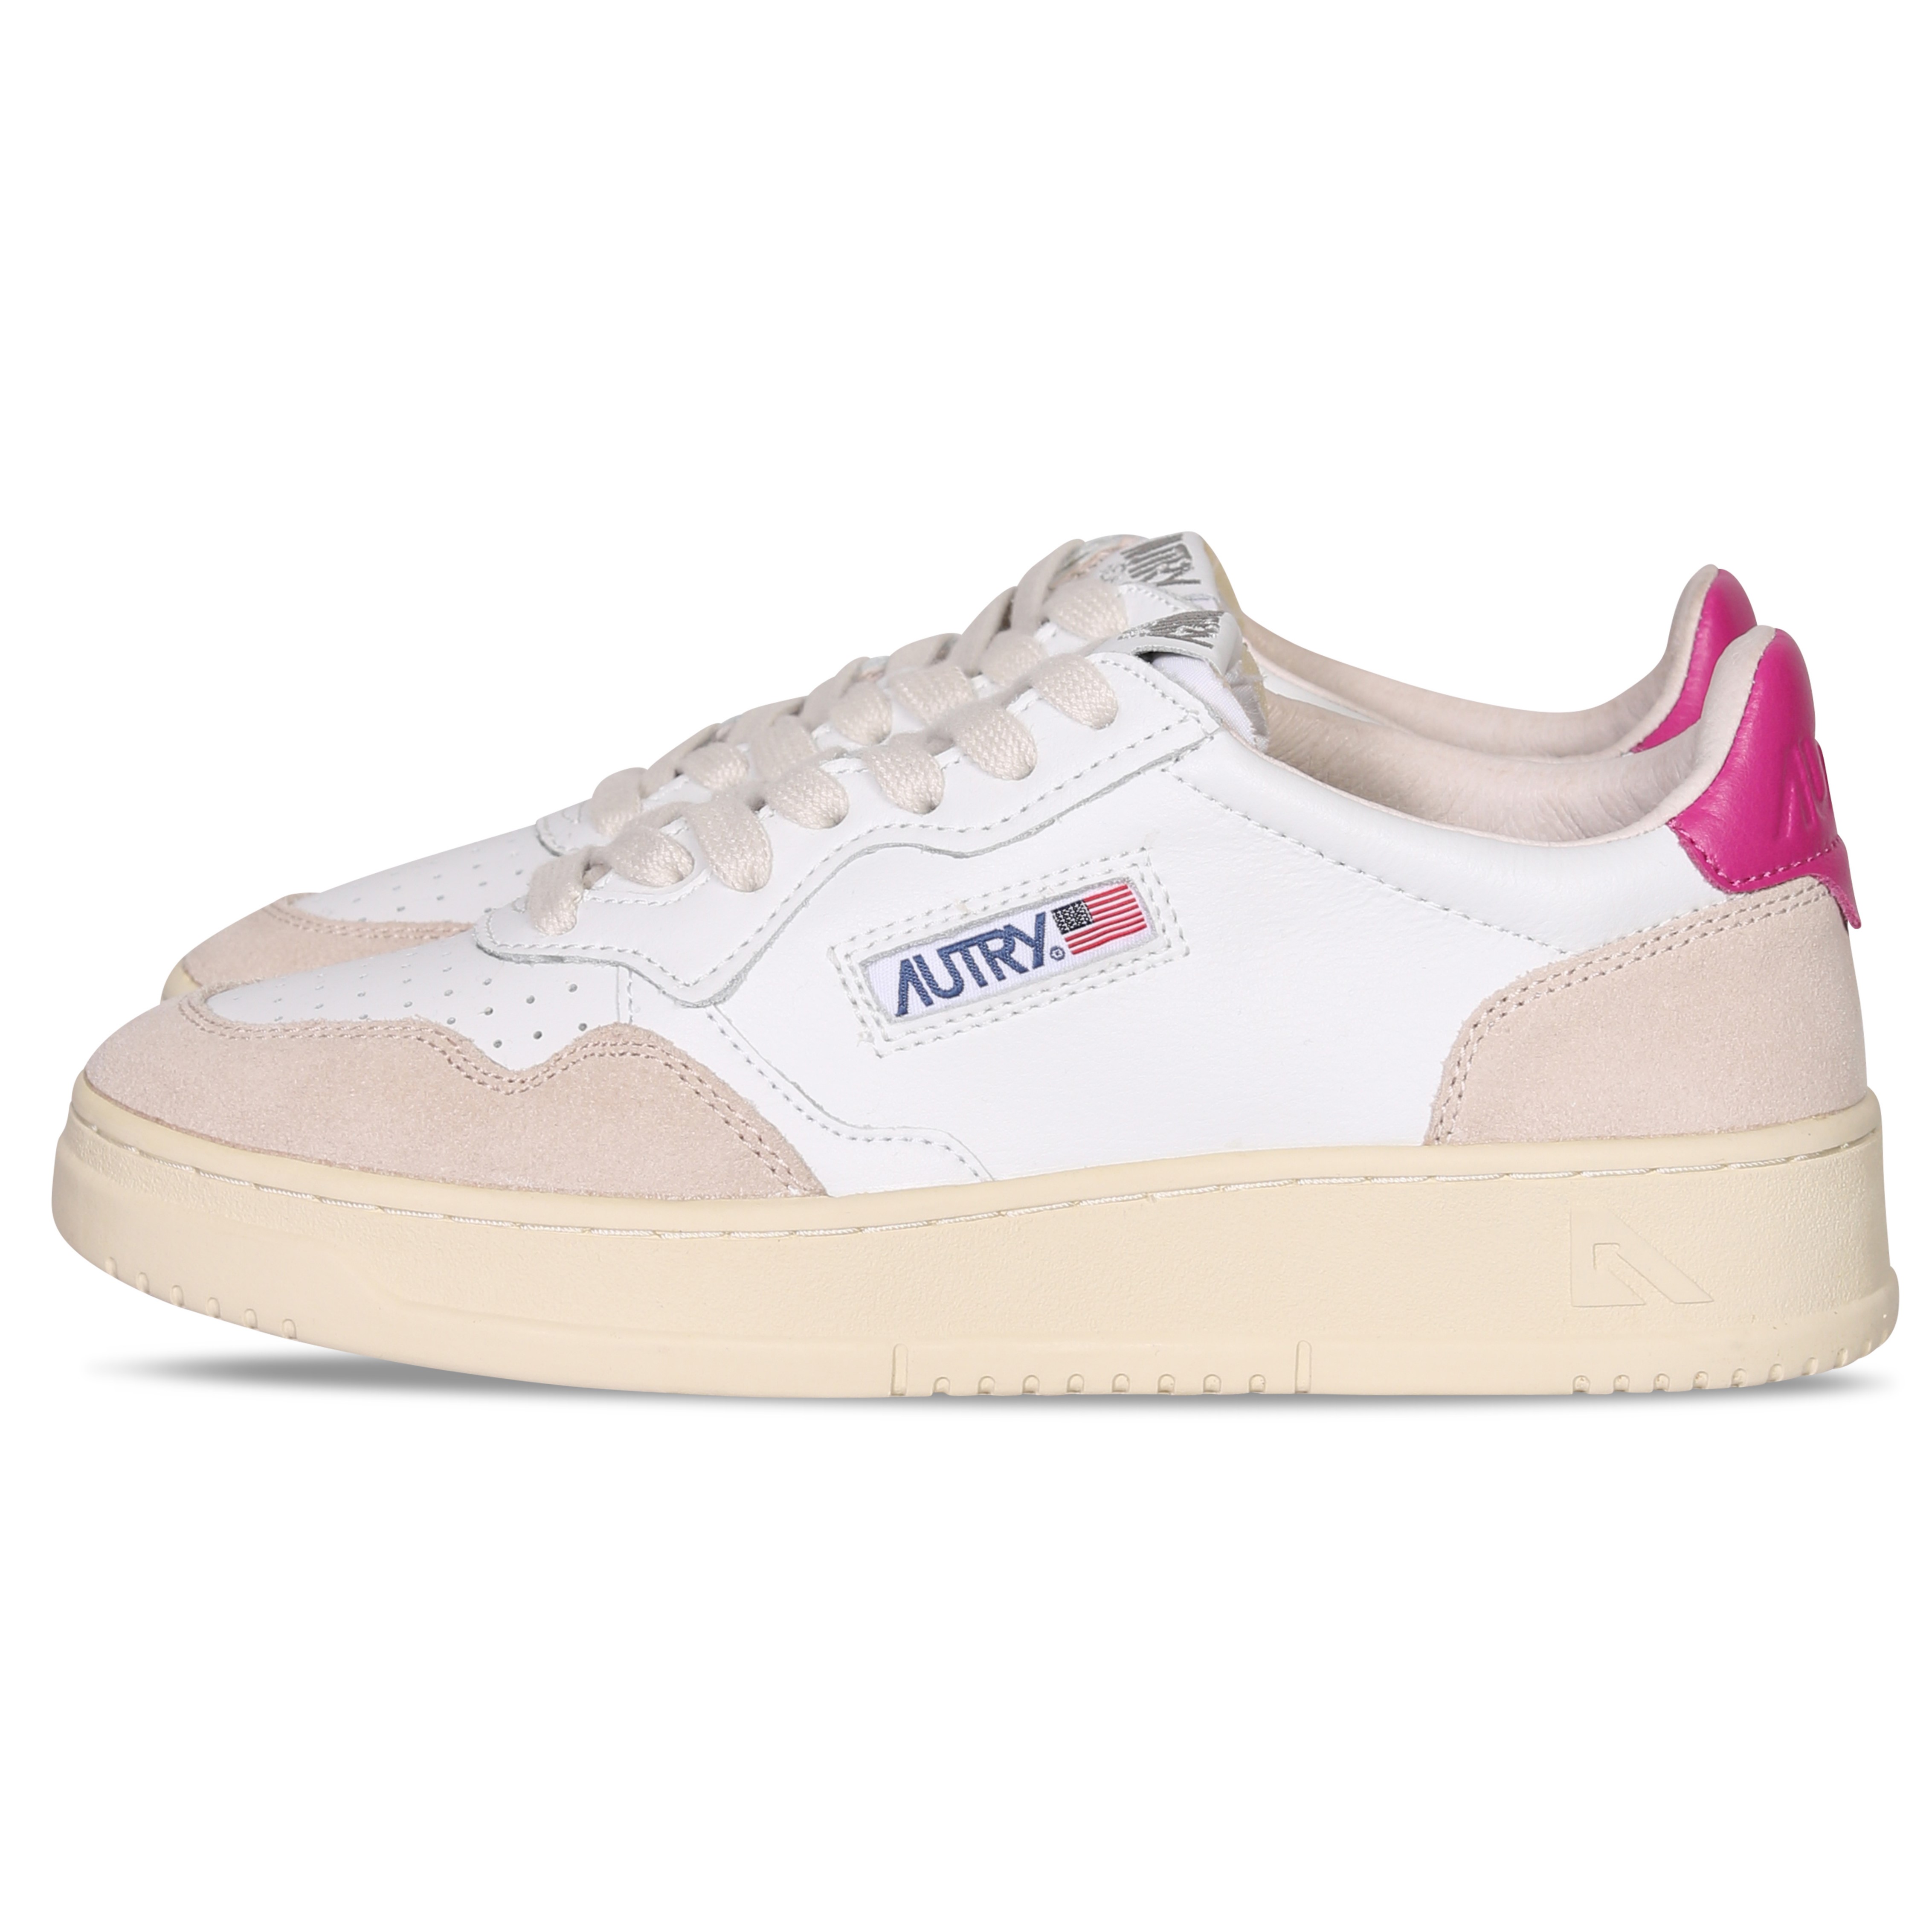 Autry Action Shoes Low Sneaker Suede/White/Bubble